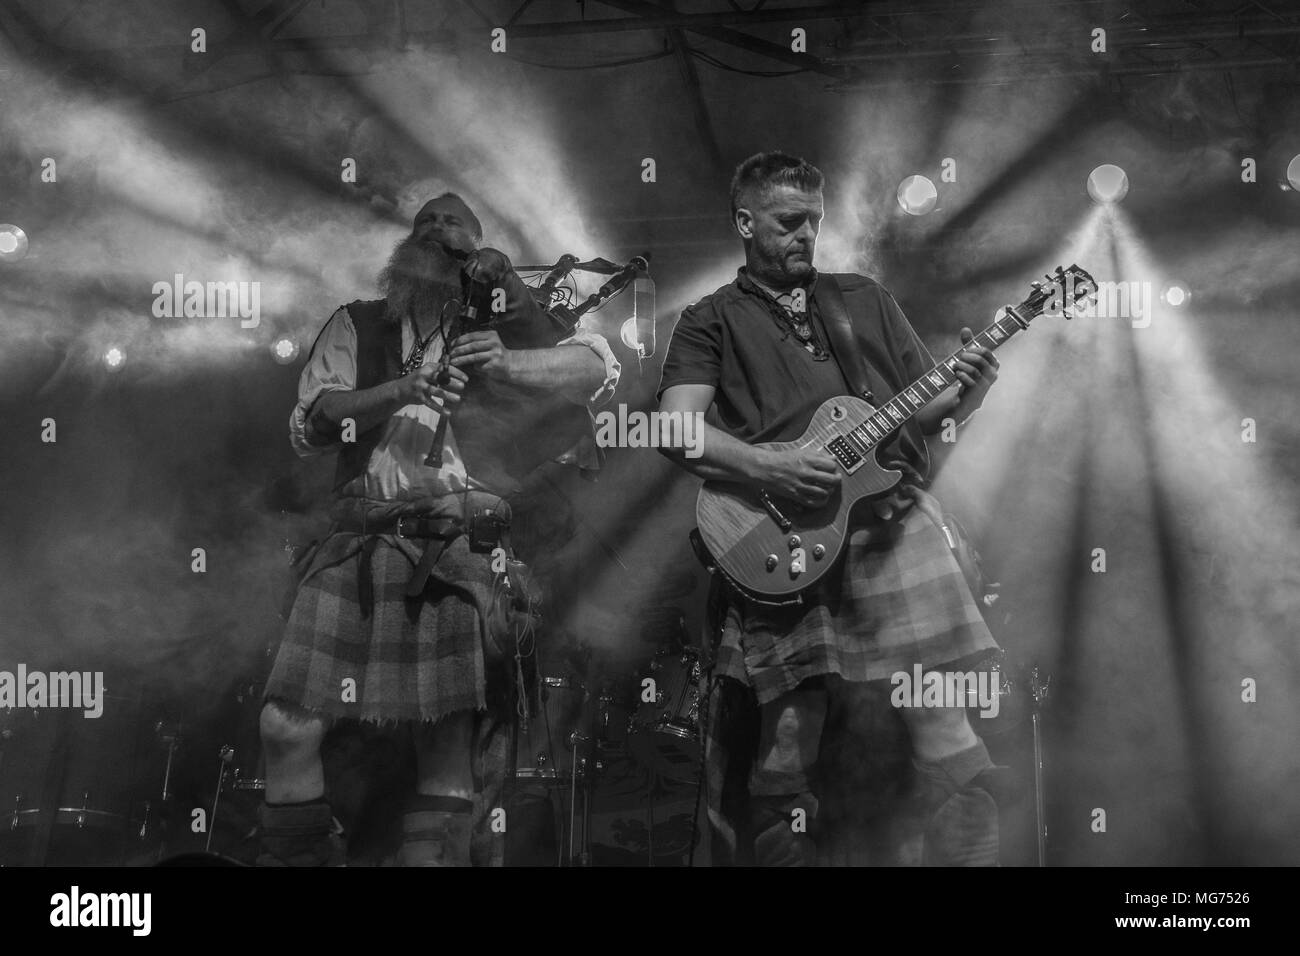 Milan, Italy - April 25, 2018: Scottish folk-band Saor Patrol, from Kincardine in Scotland, performs Insubria Festival of Marcallo con Casone (MI). Brambilla Simone Live News photographer Credit: Simone Brambilla/Alamy Live News Stock Photo